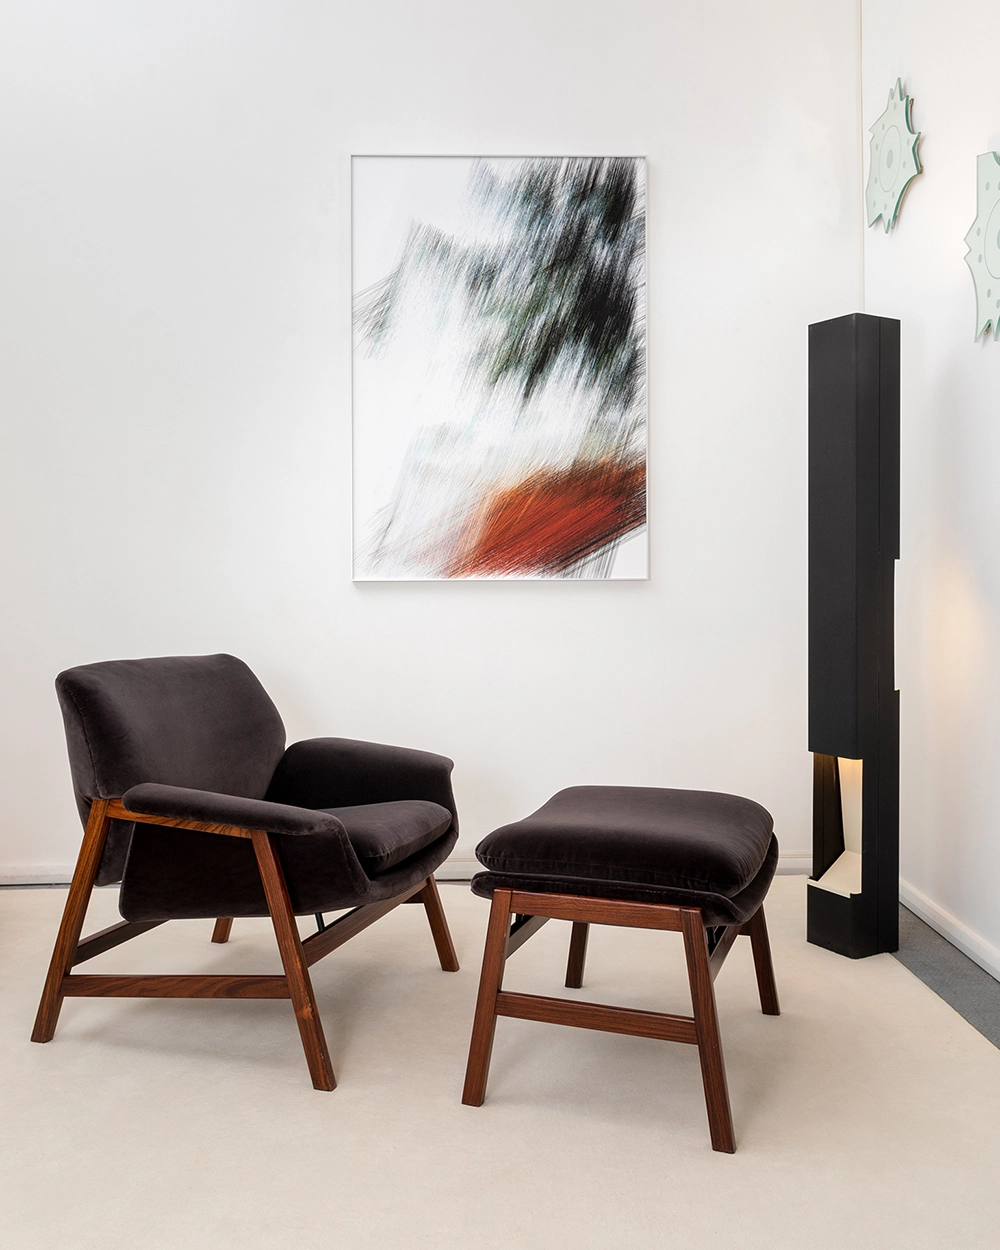 2 armchairs model n°849 and 1 ottoman n°849/S (plum) - Gianfranco Frattini - Seating - Galerie kreo